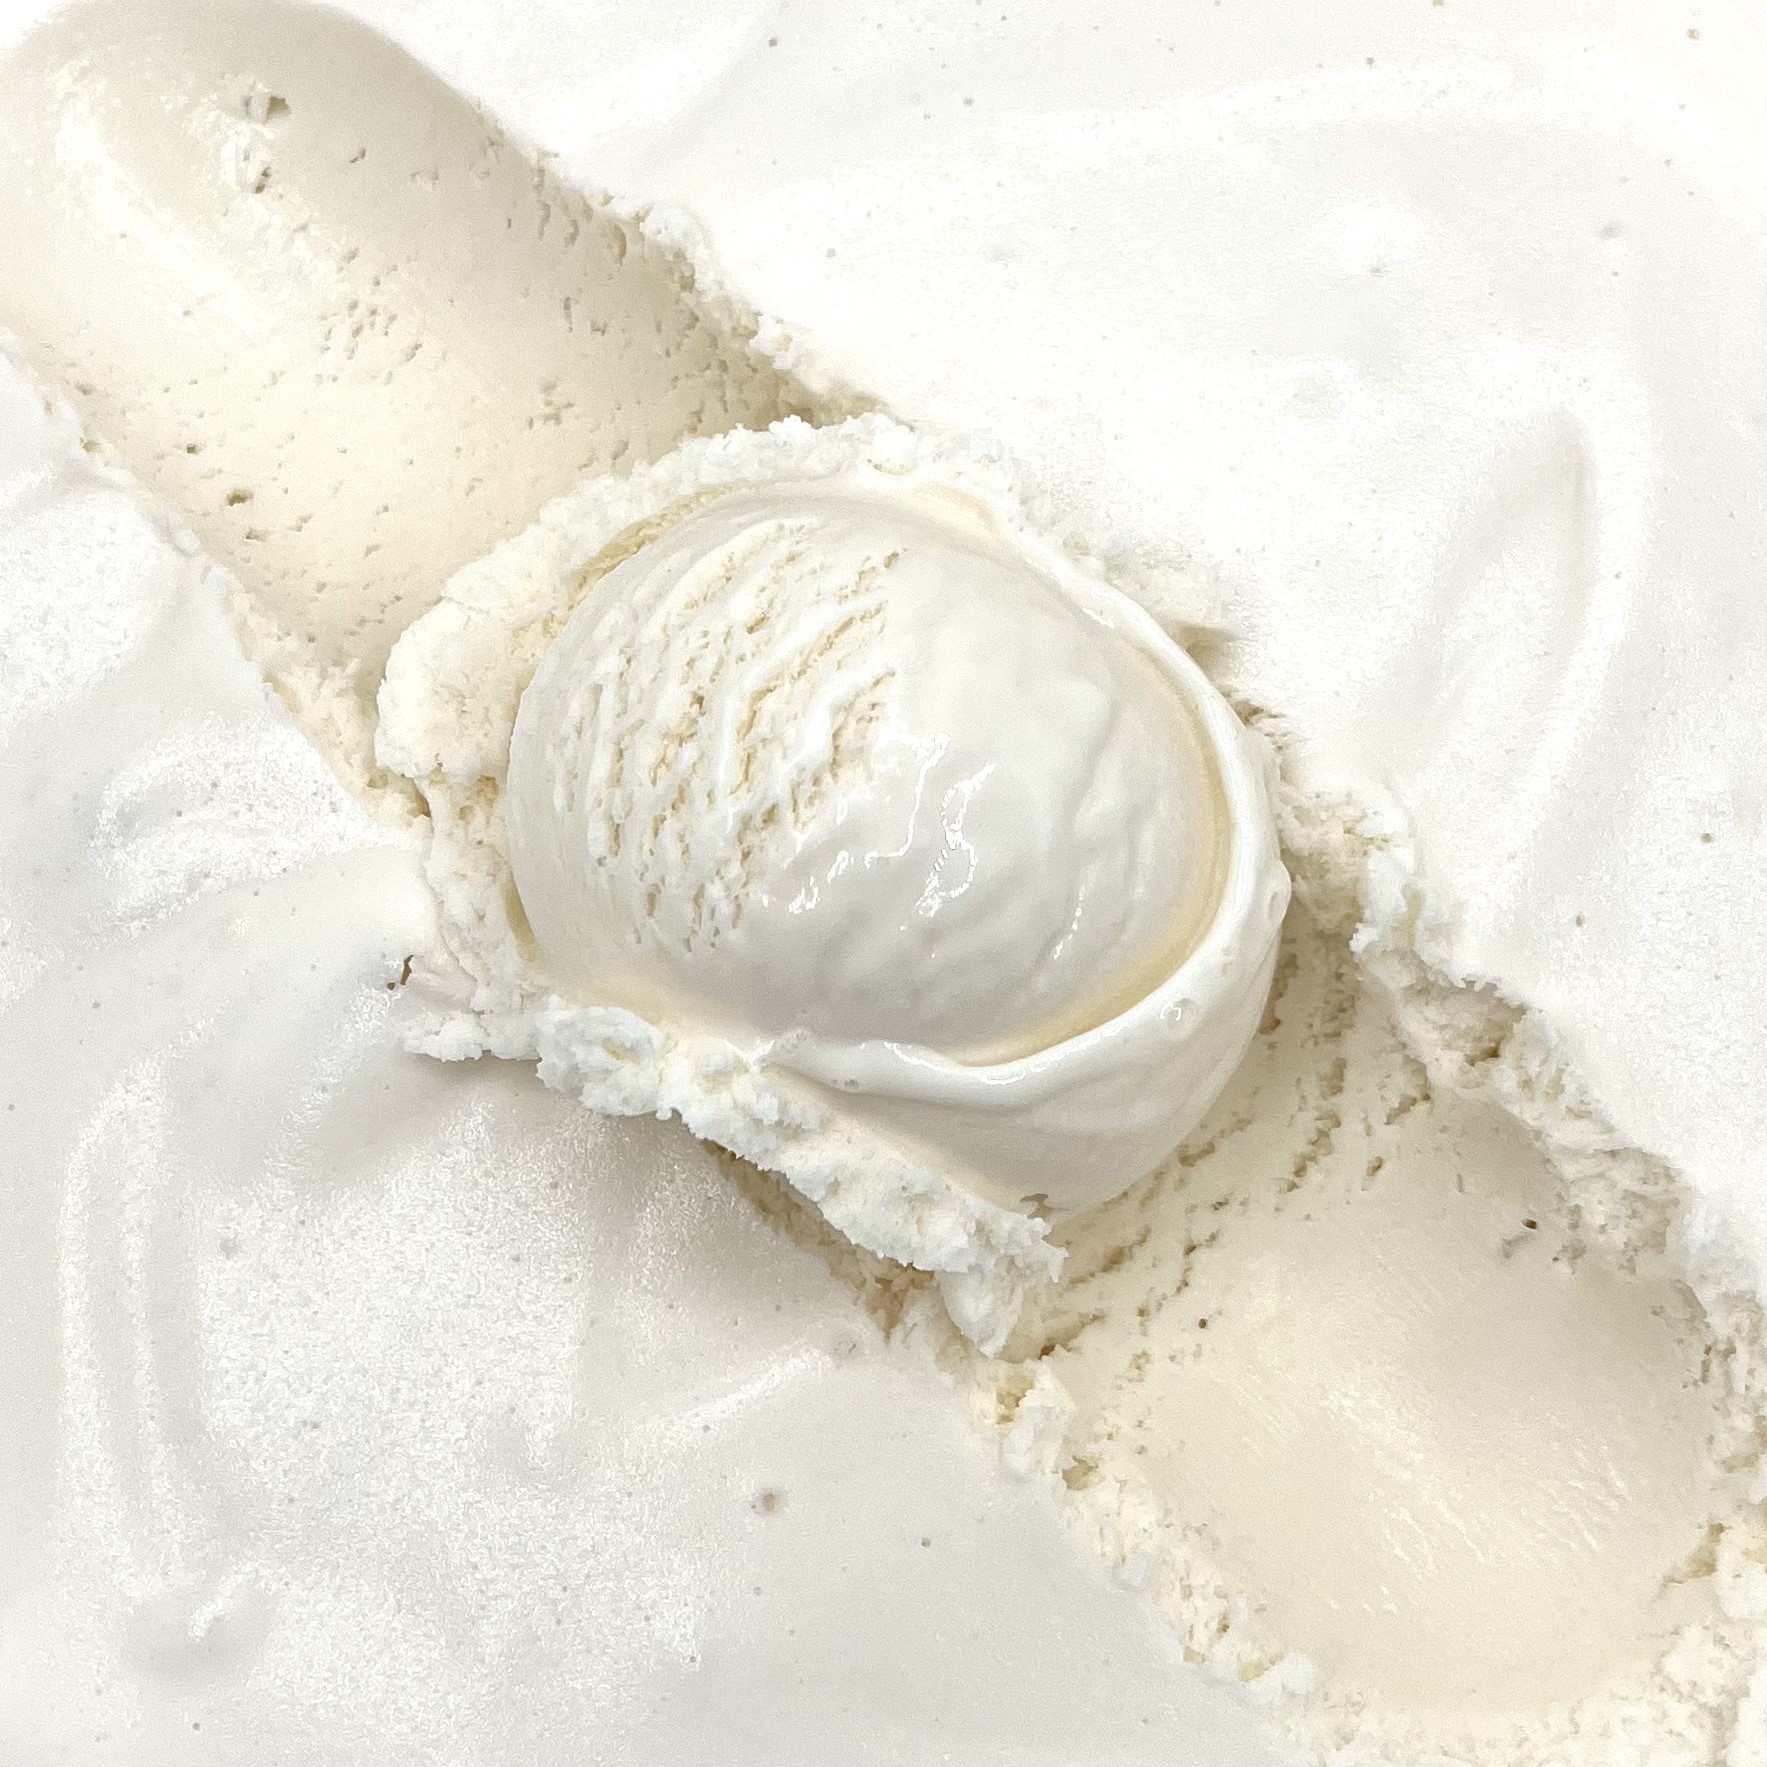 A scoop of Vanilla ice cream